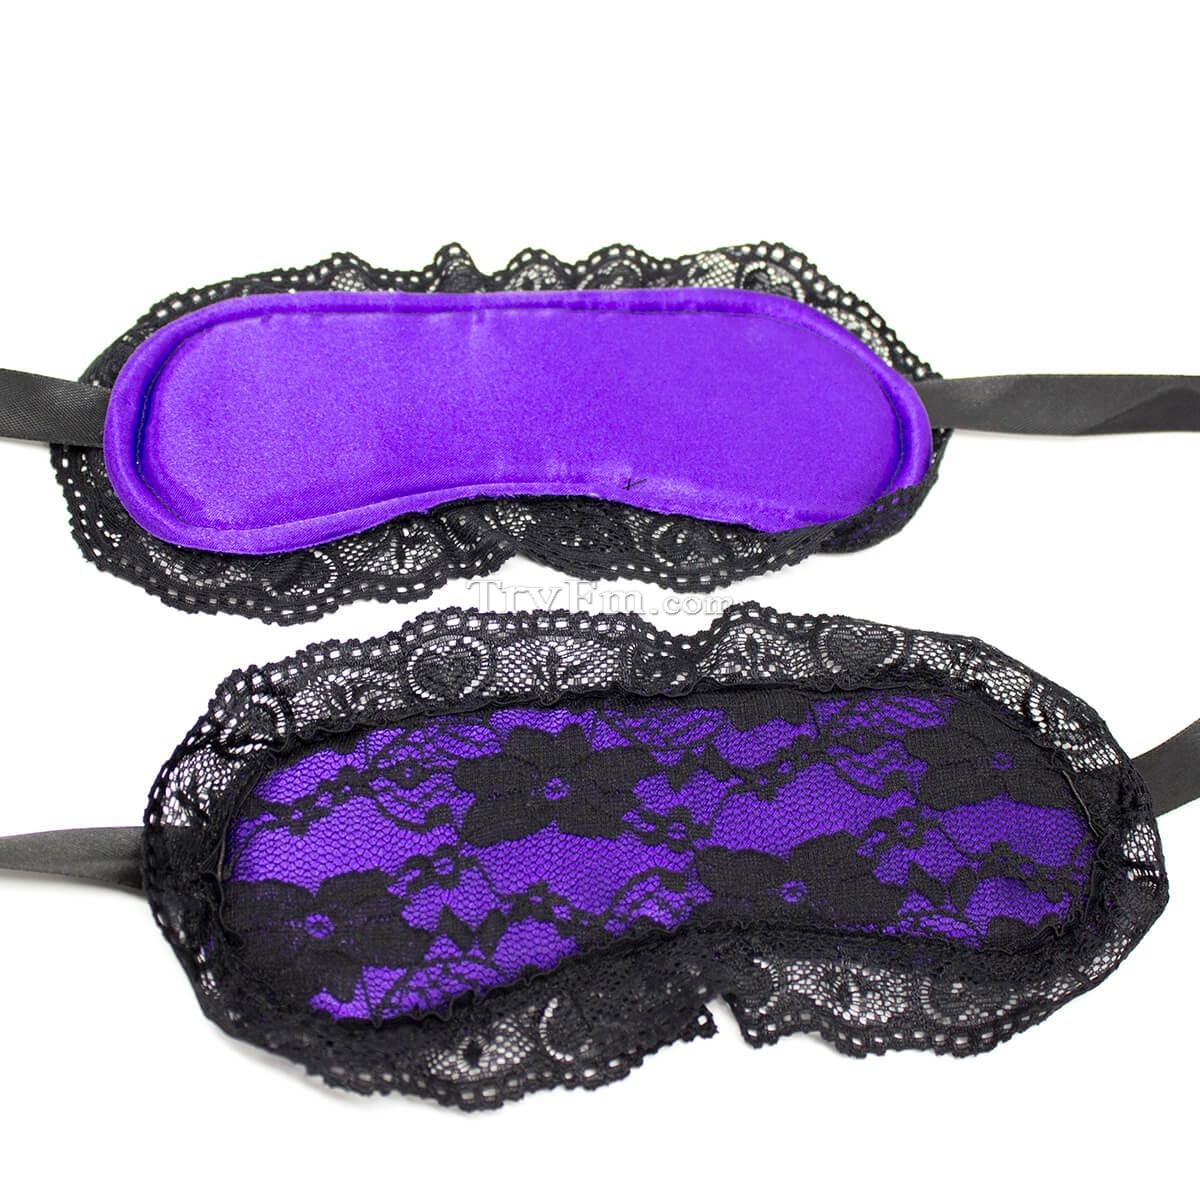 2-lace-blindfold-handcuffs-set-purple17.jpg